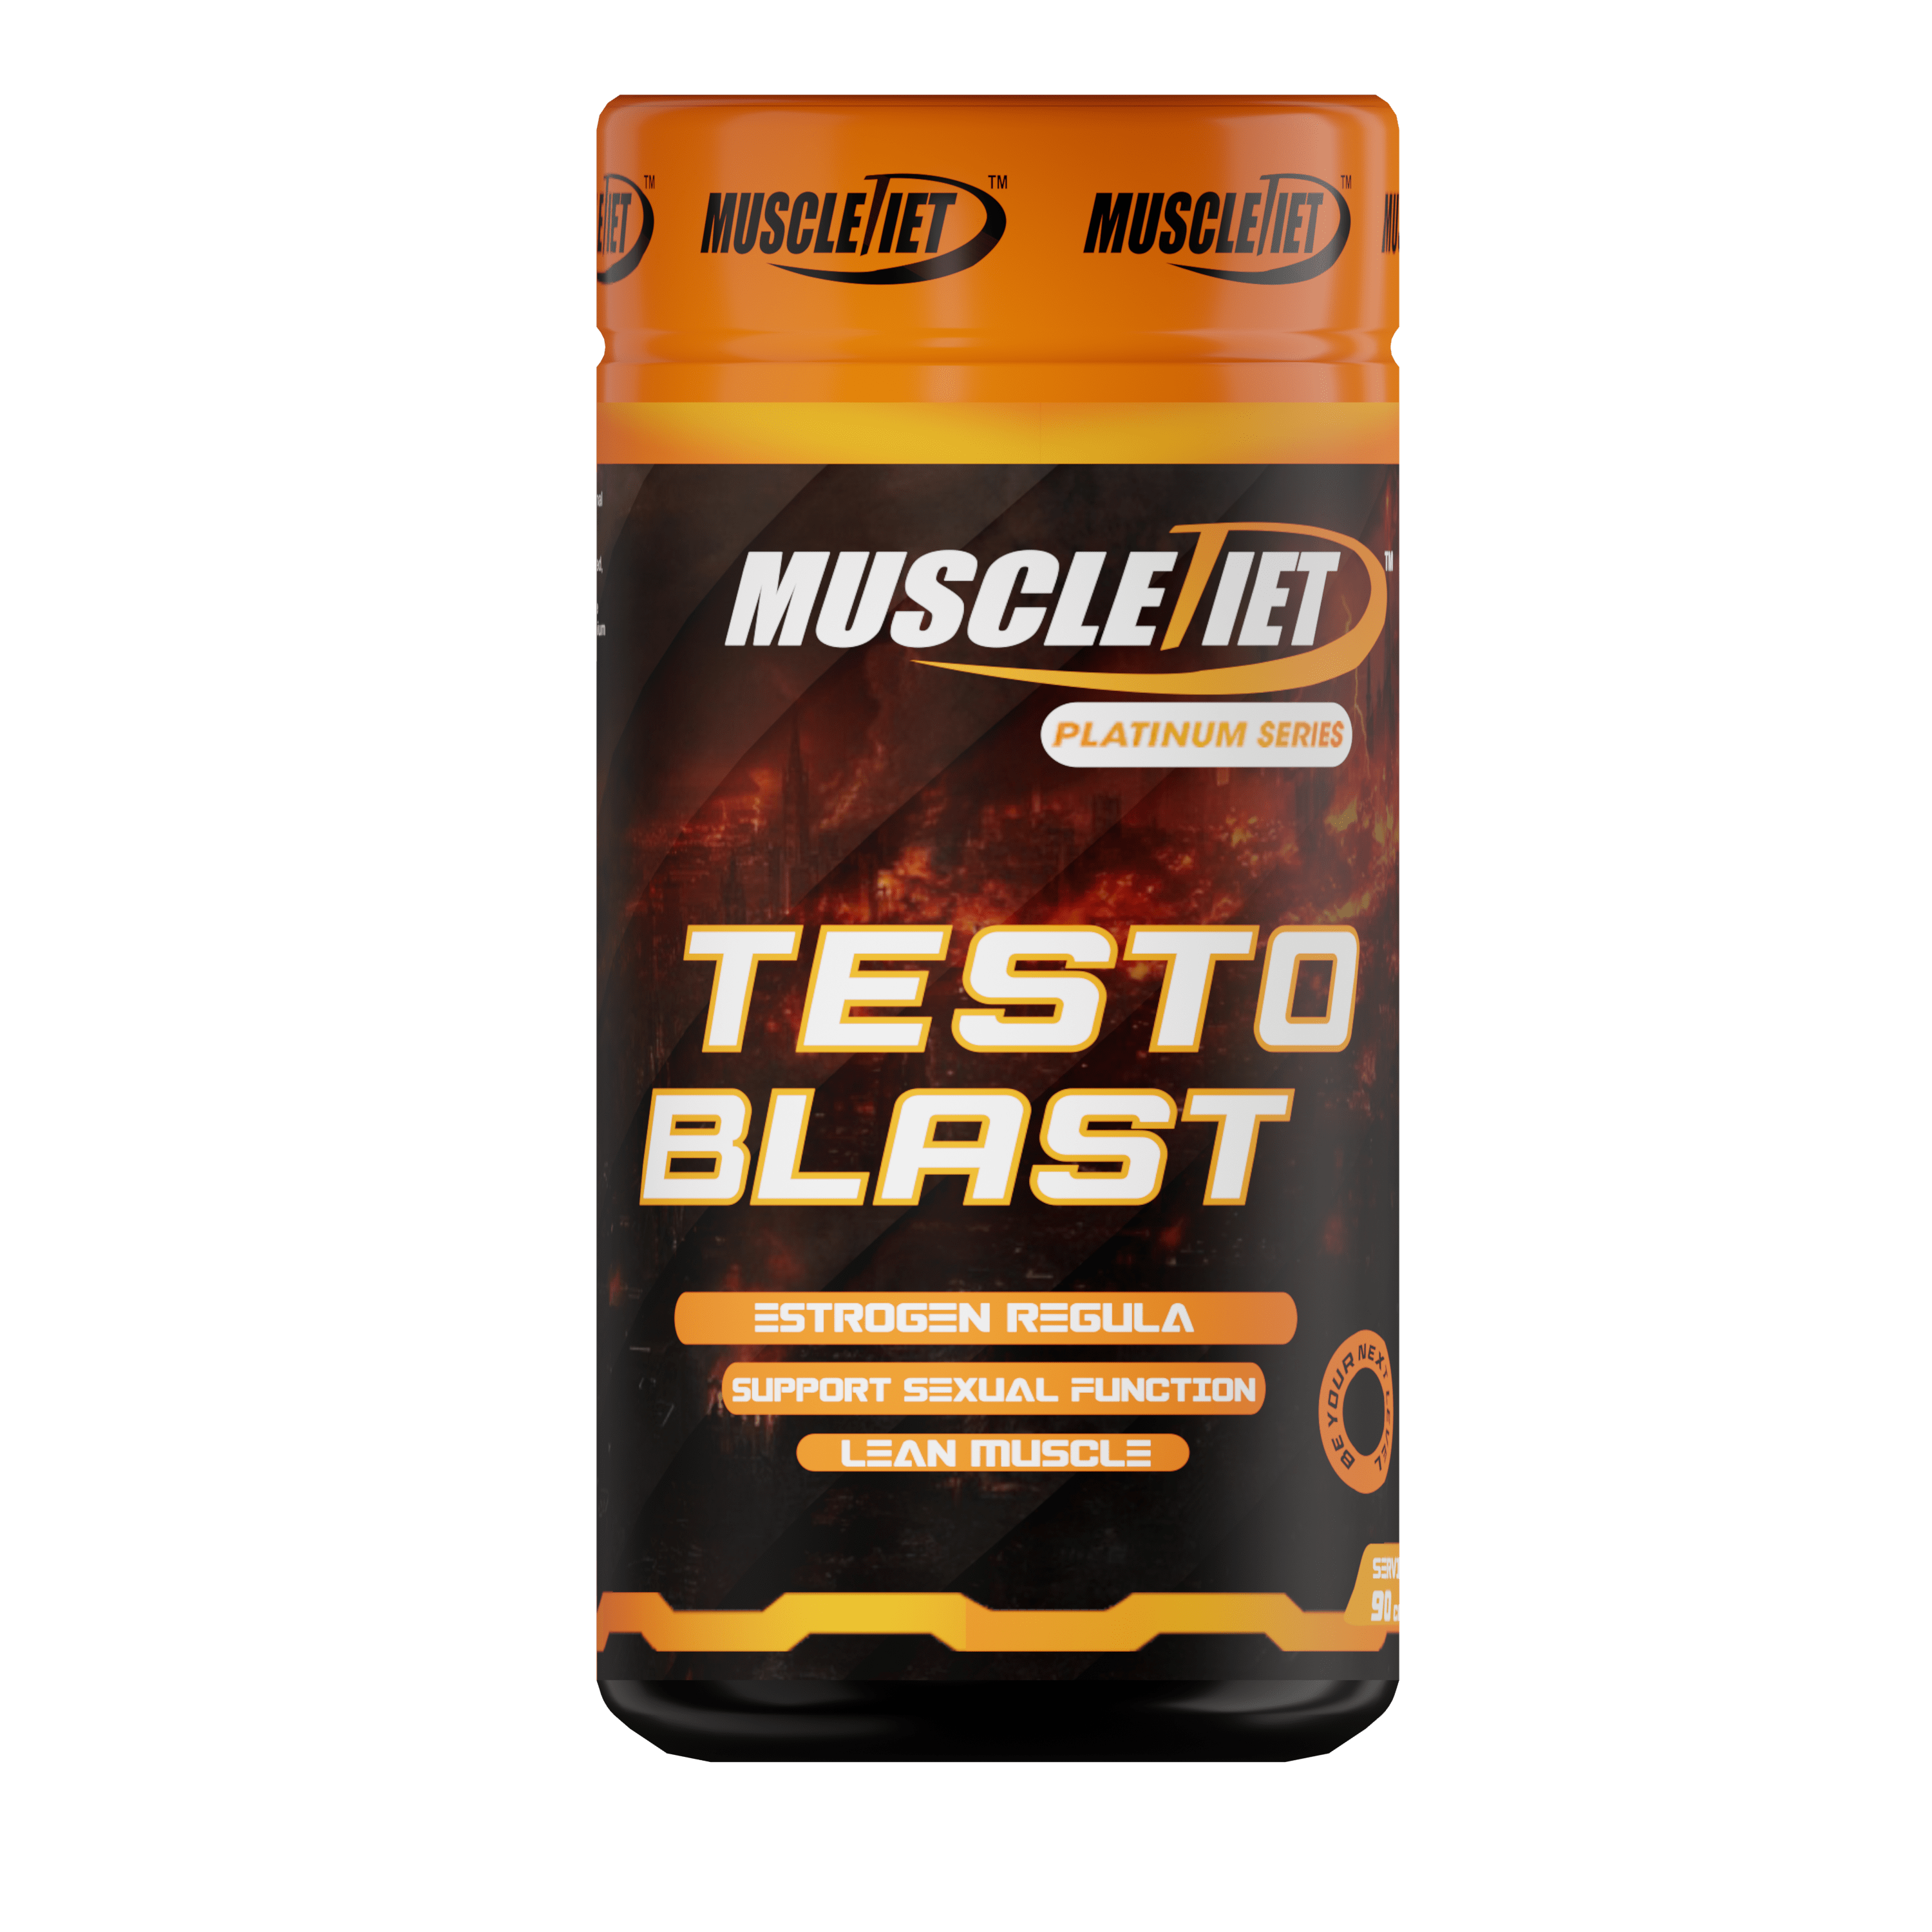 Muscle Diet Platinum Test Blast Testosterone Booster -90 Capsule